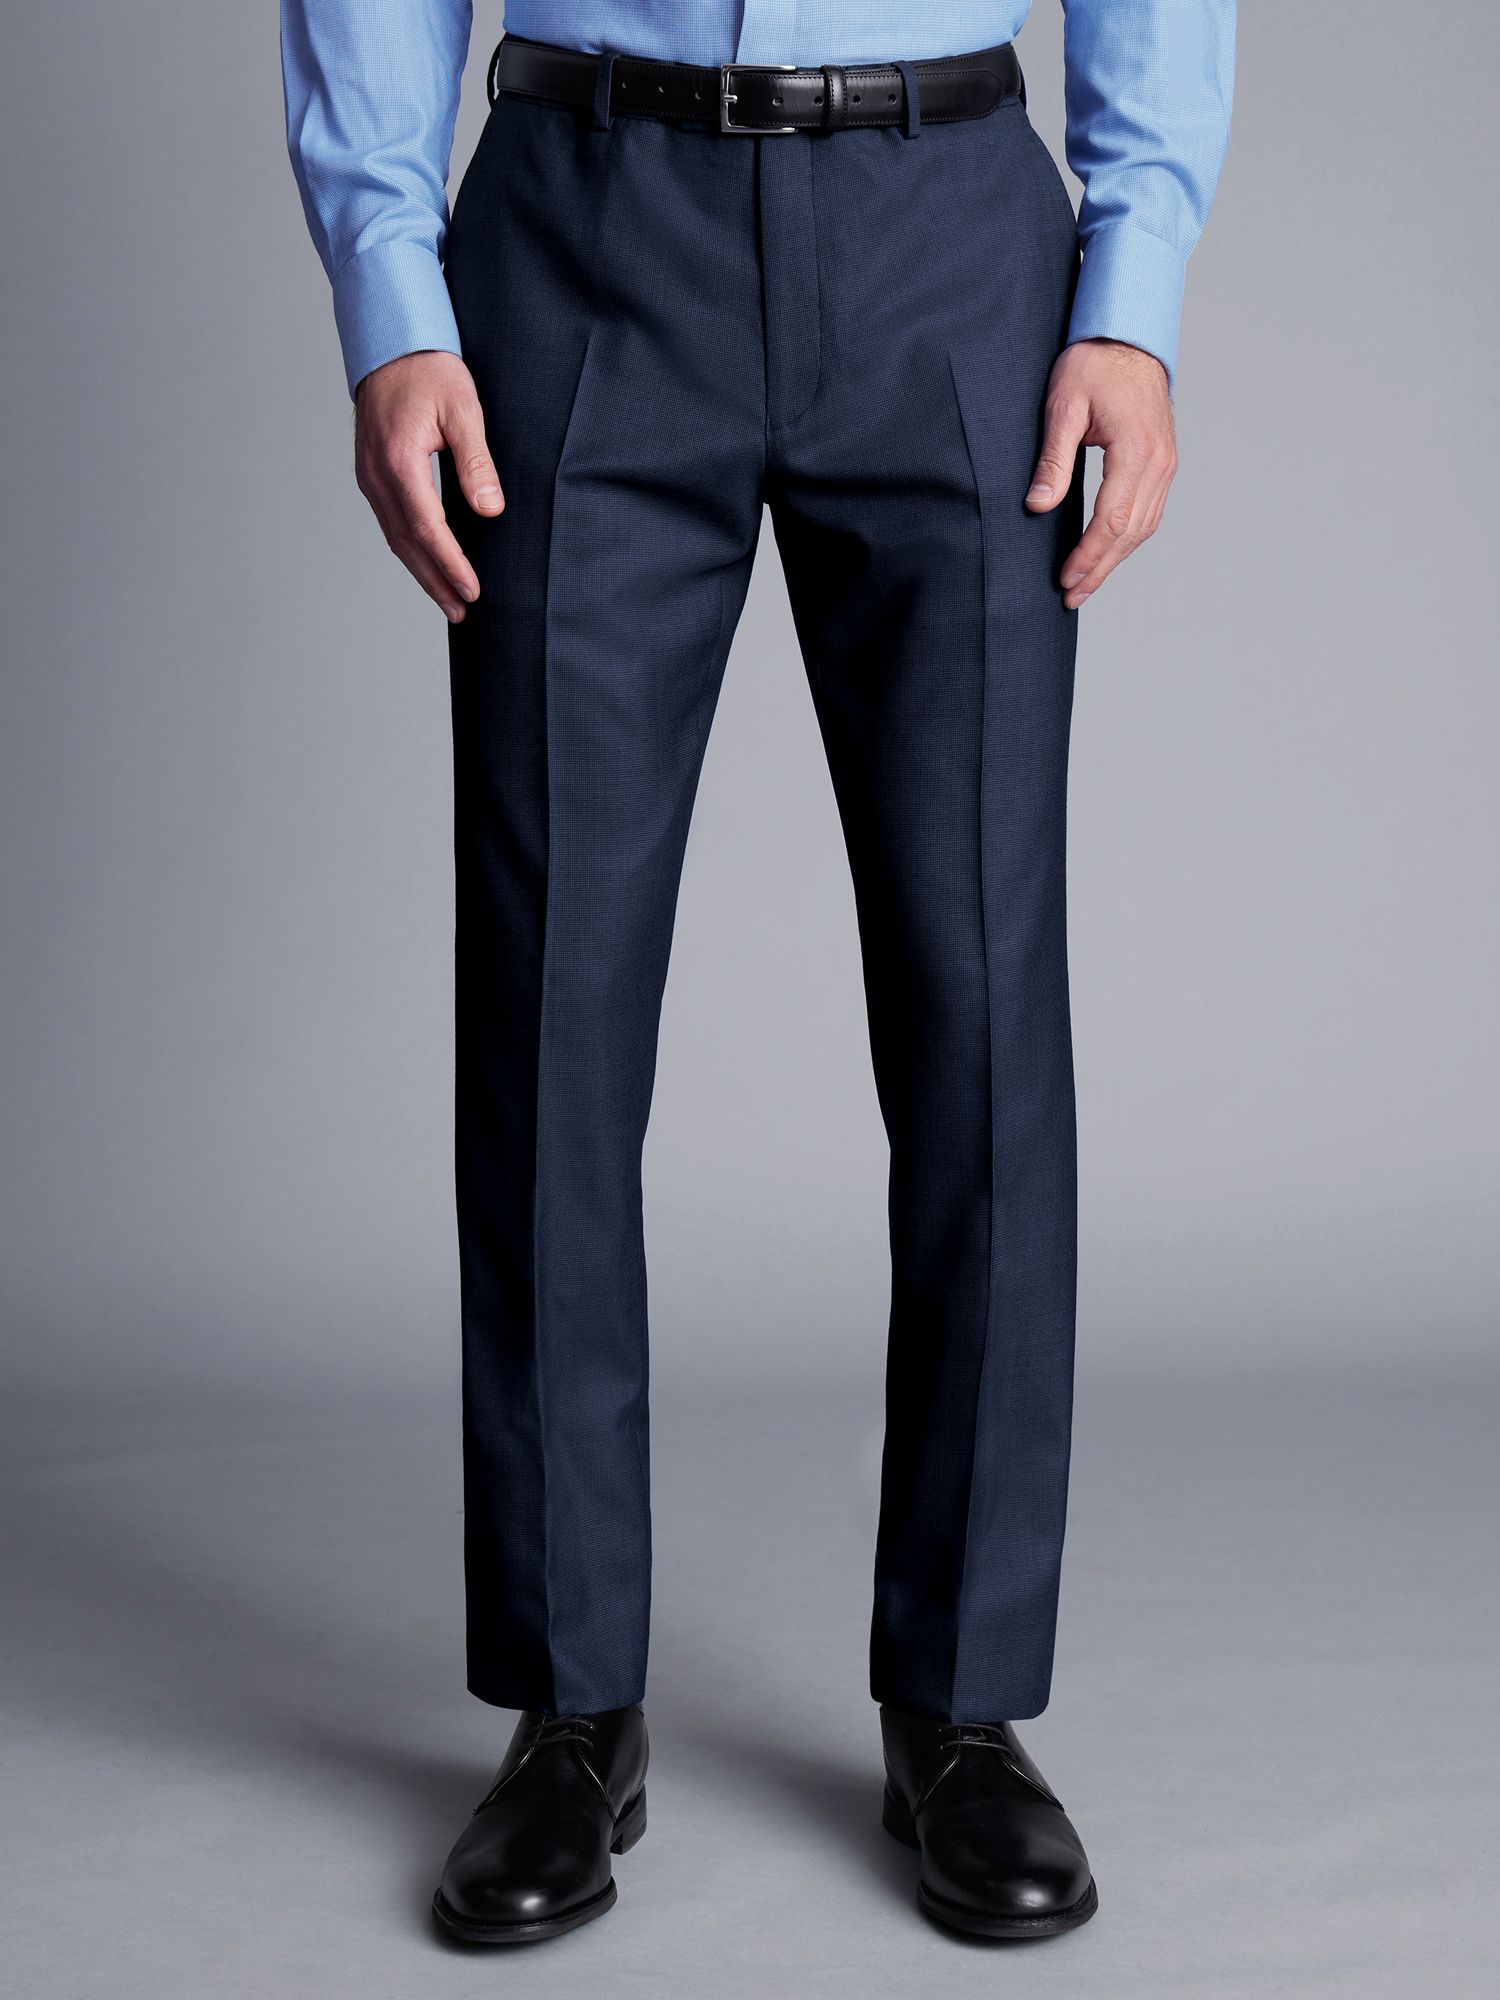 Charles Tyrwhitt Slim Fit Performance Trousers, Ink Blue